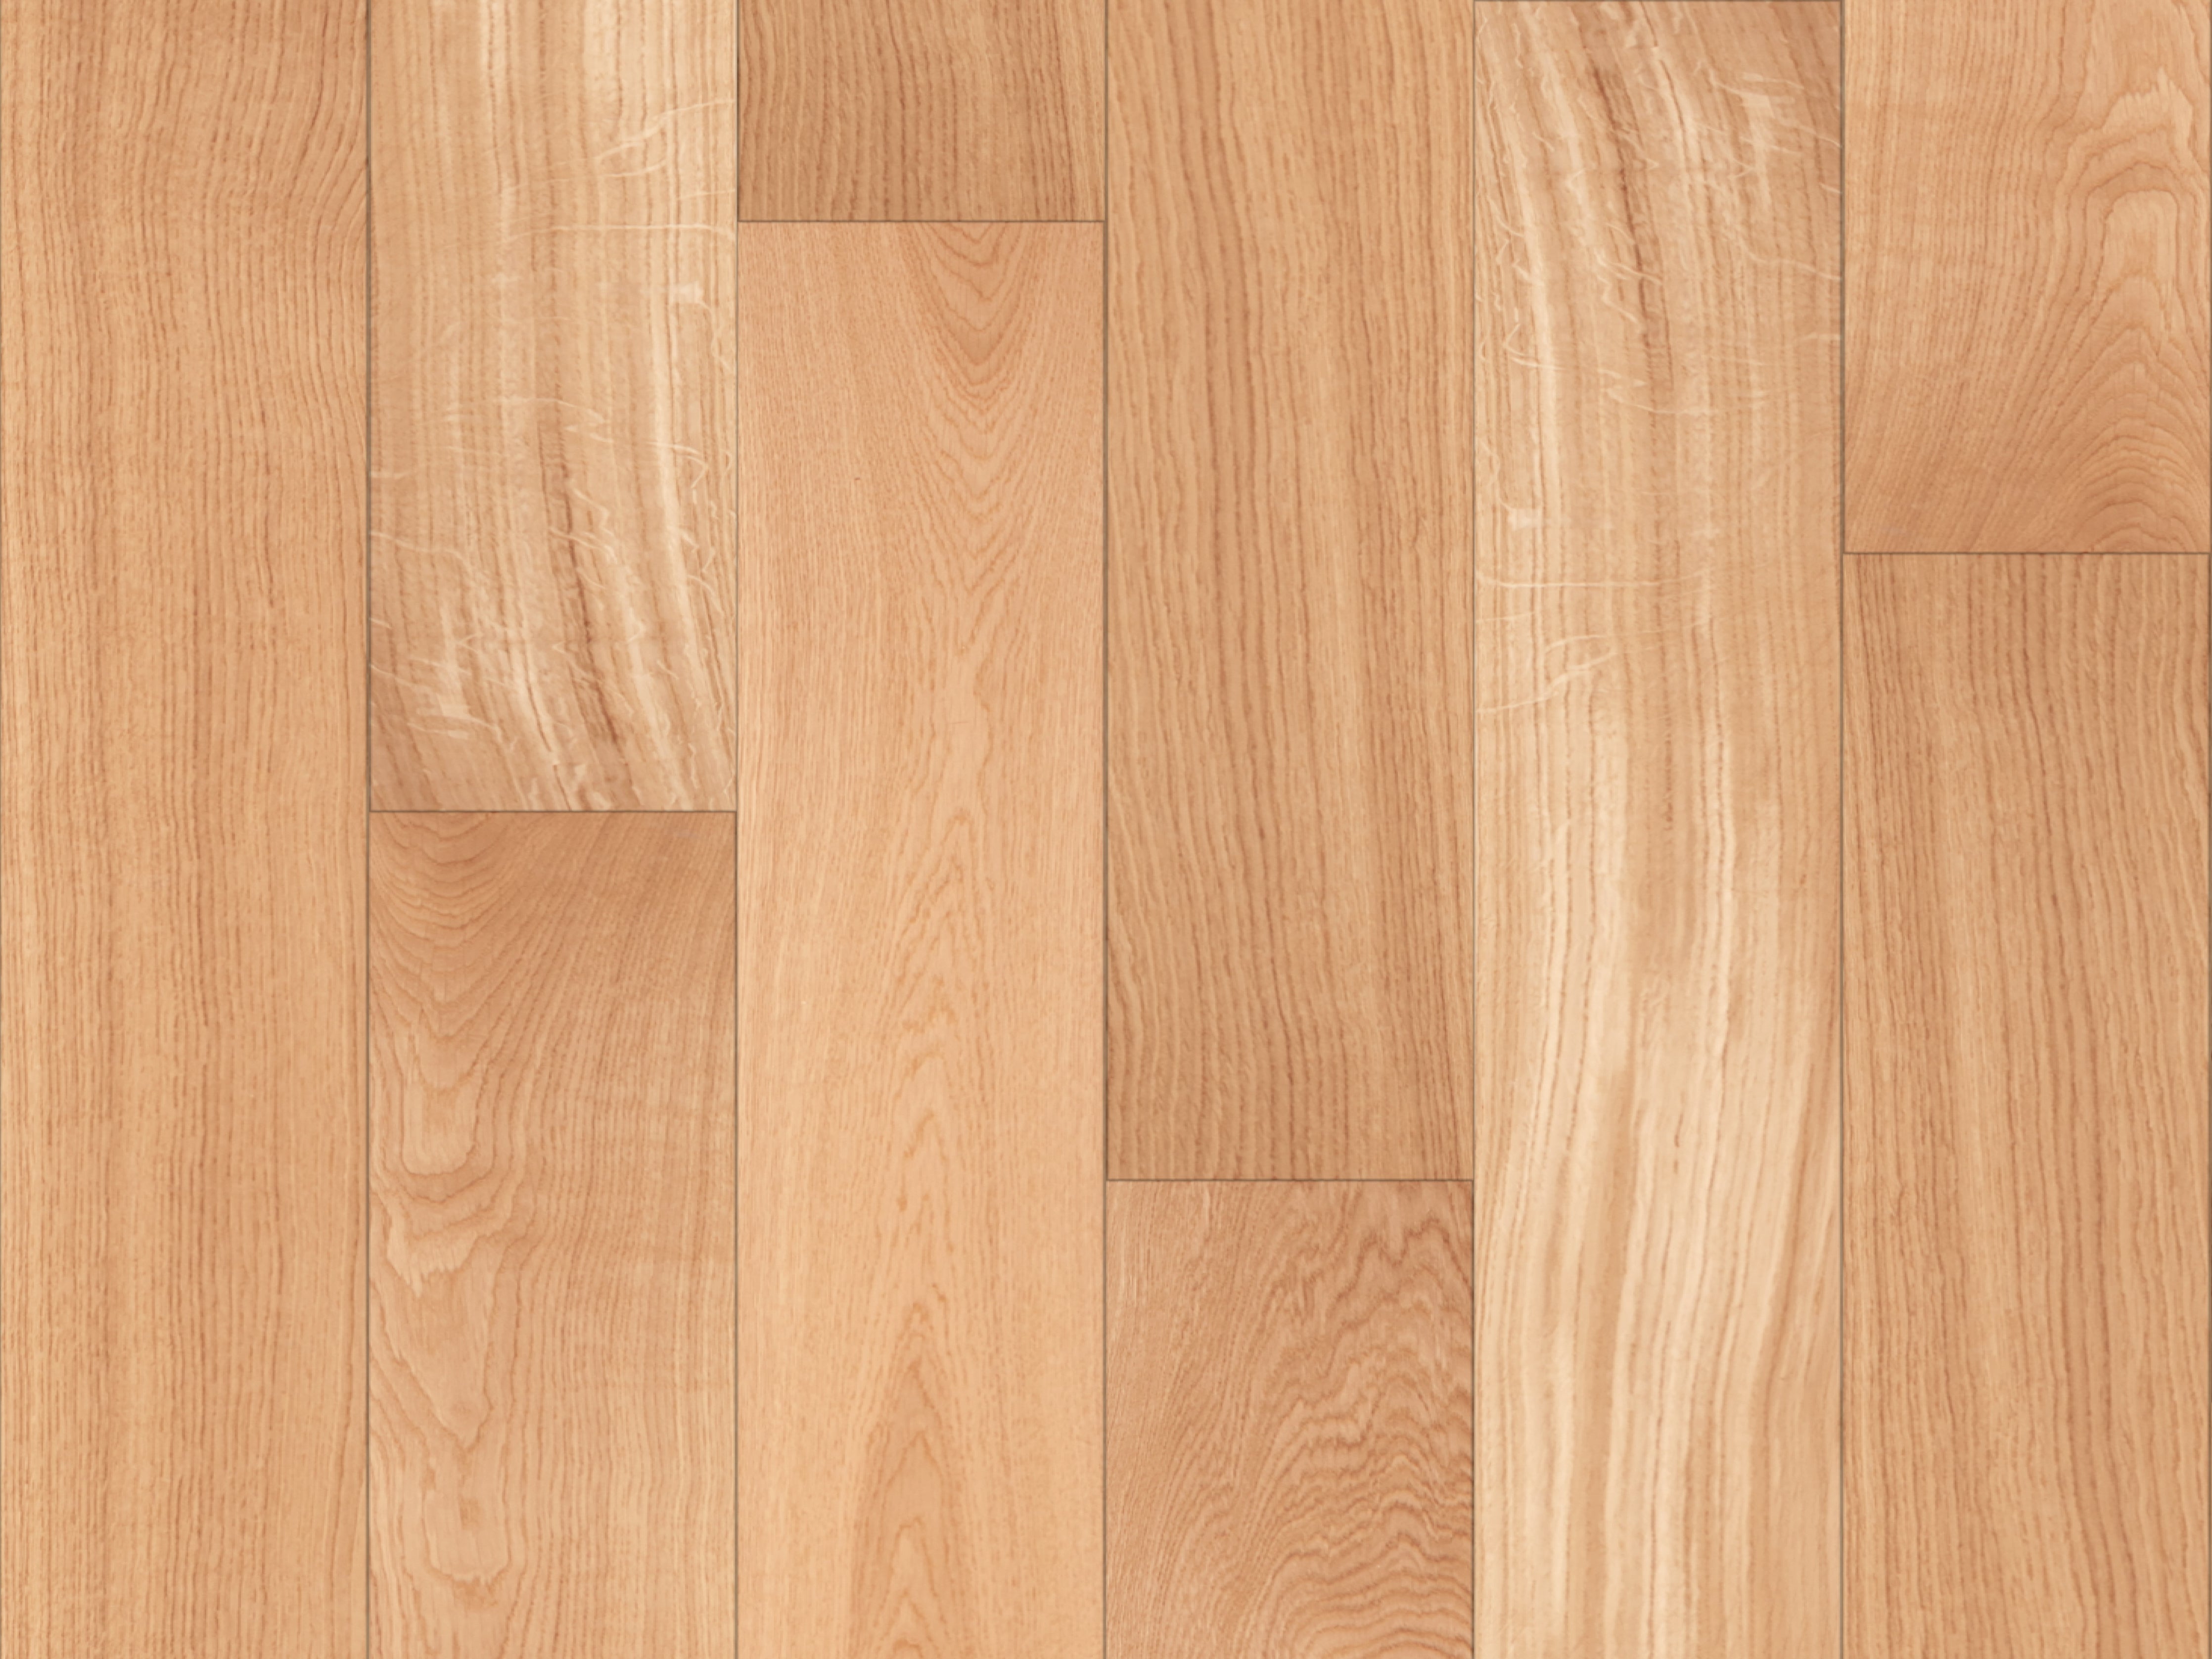 duchateau signature vernal origine european oak engineered hardnatural wood floor uv oil finish for interior use distributed by surface group international